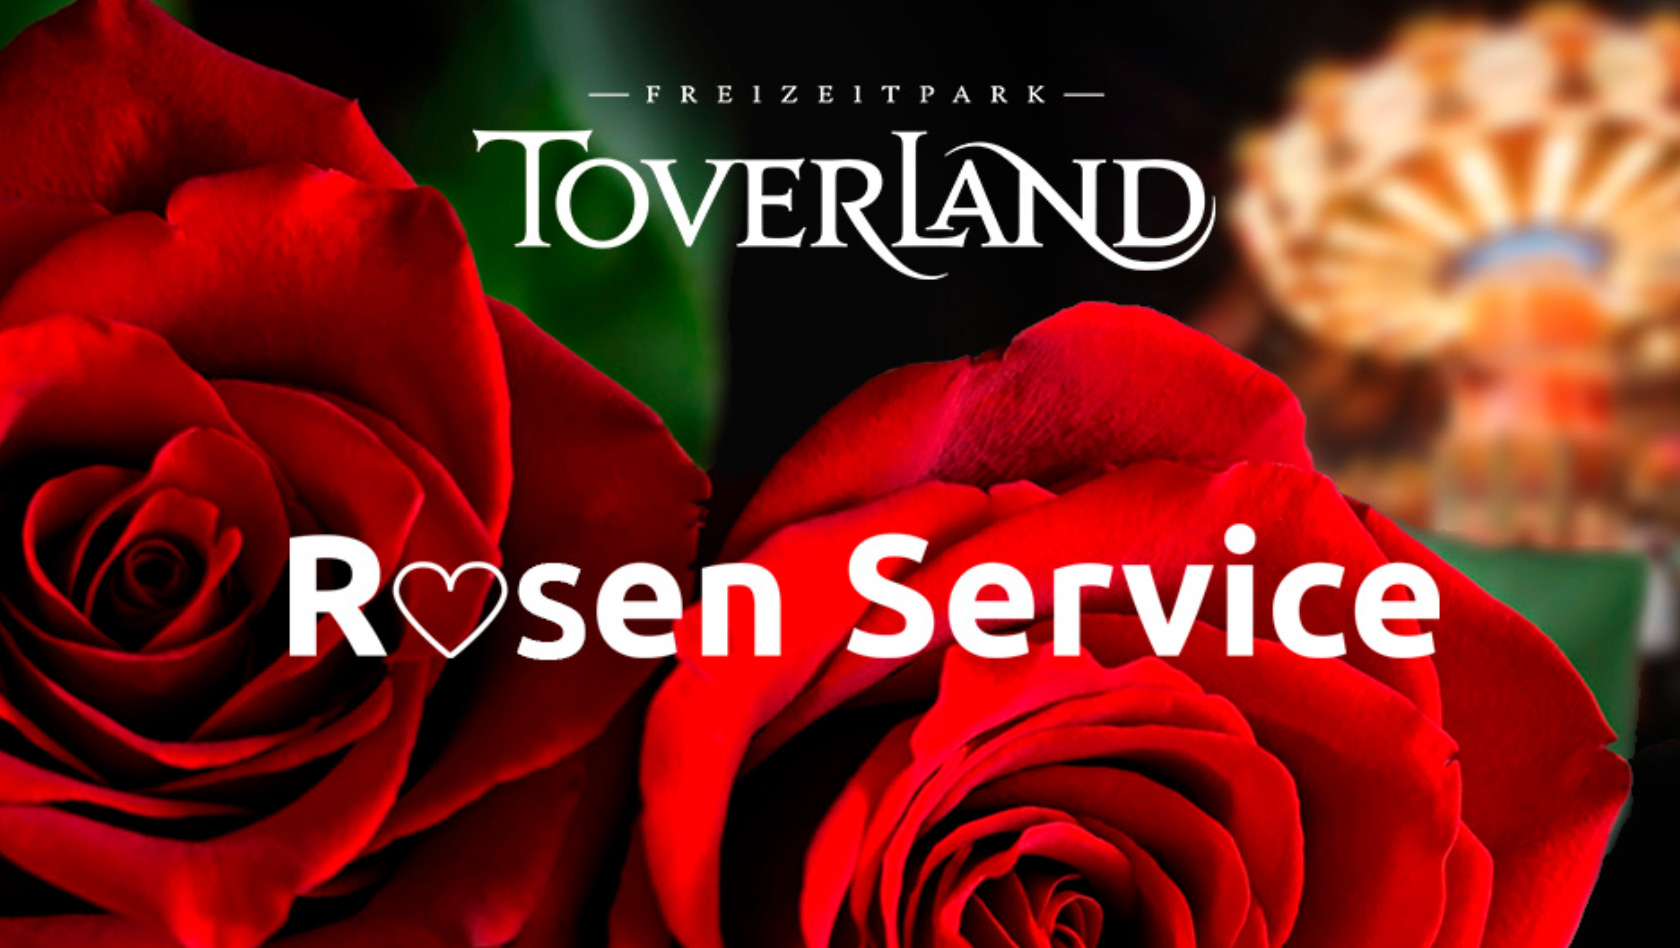 Toverland Rosen Service